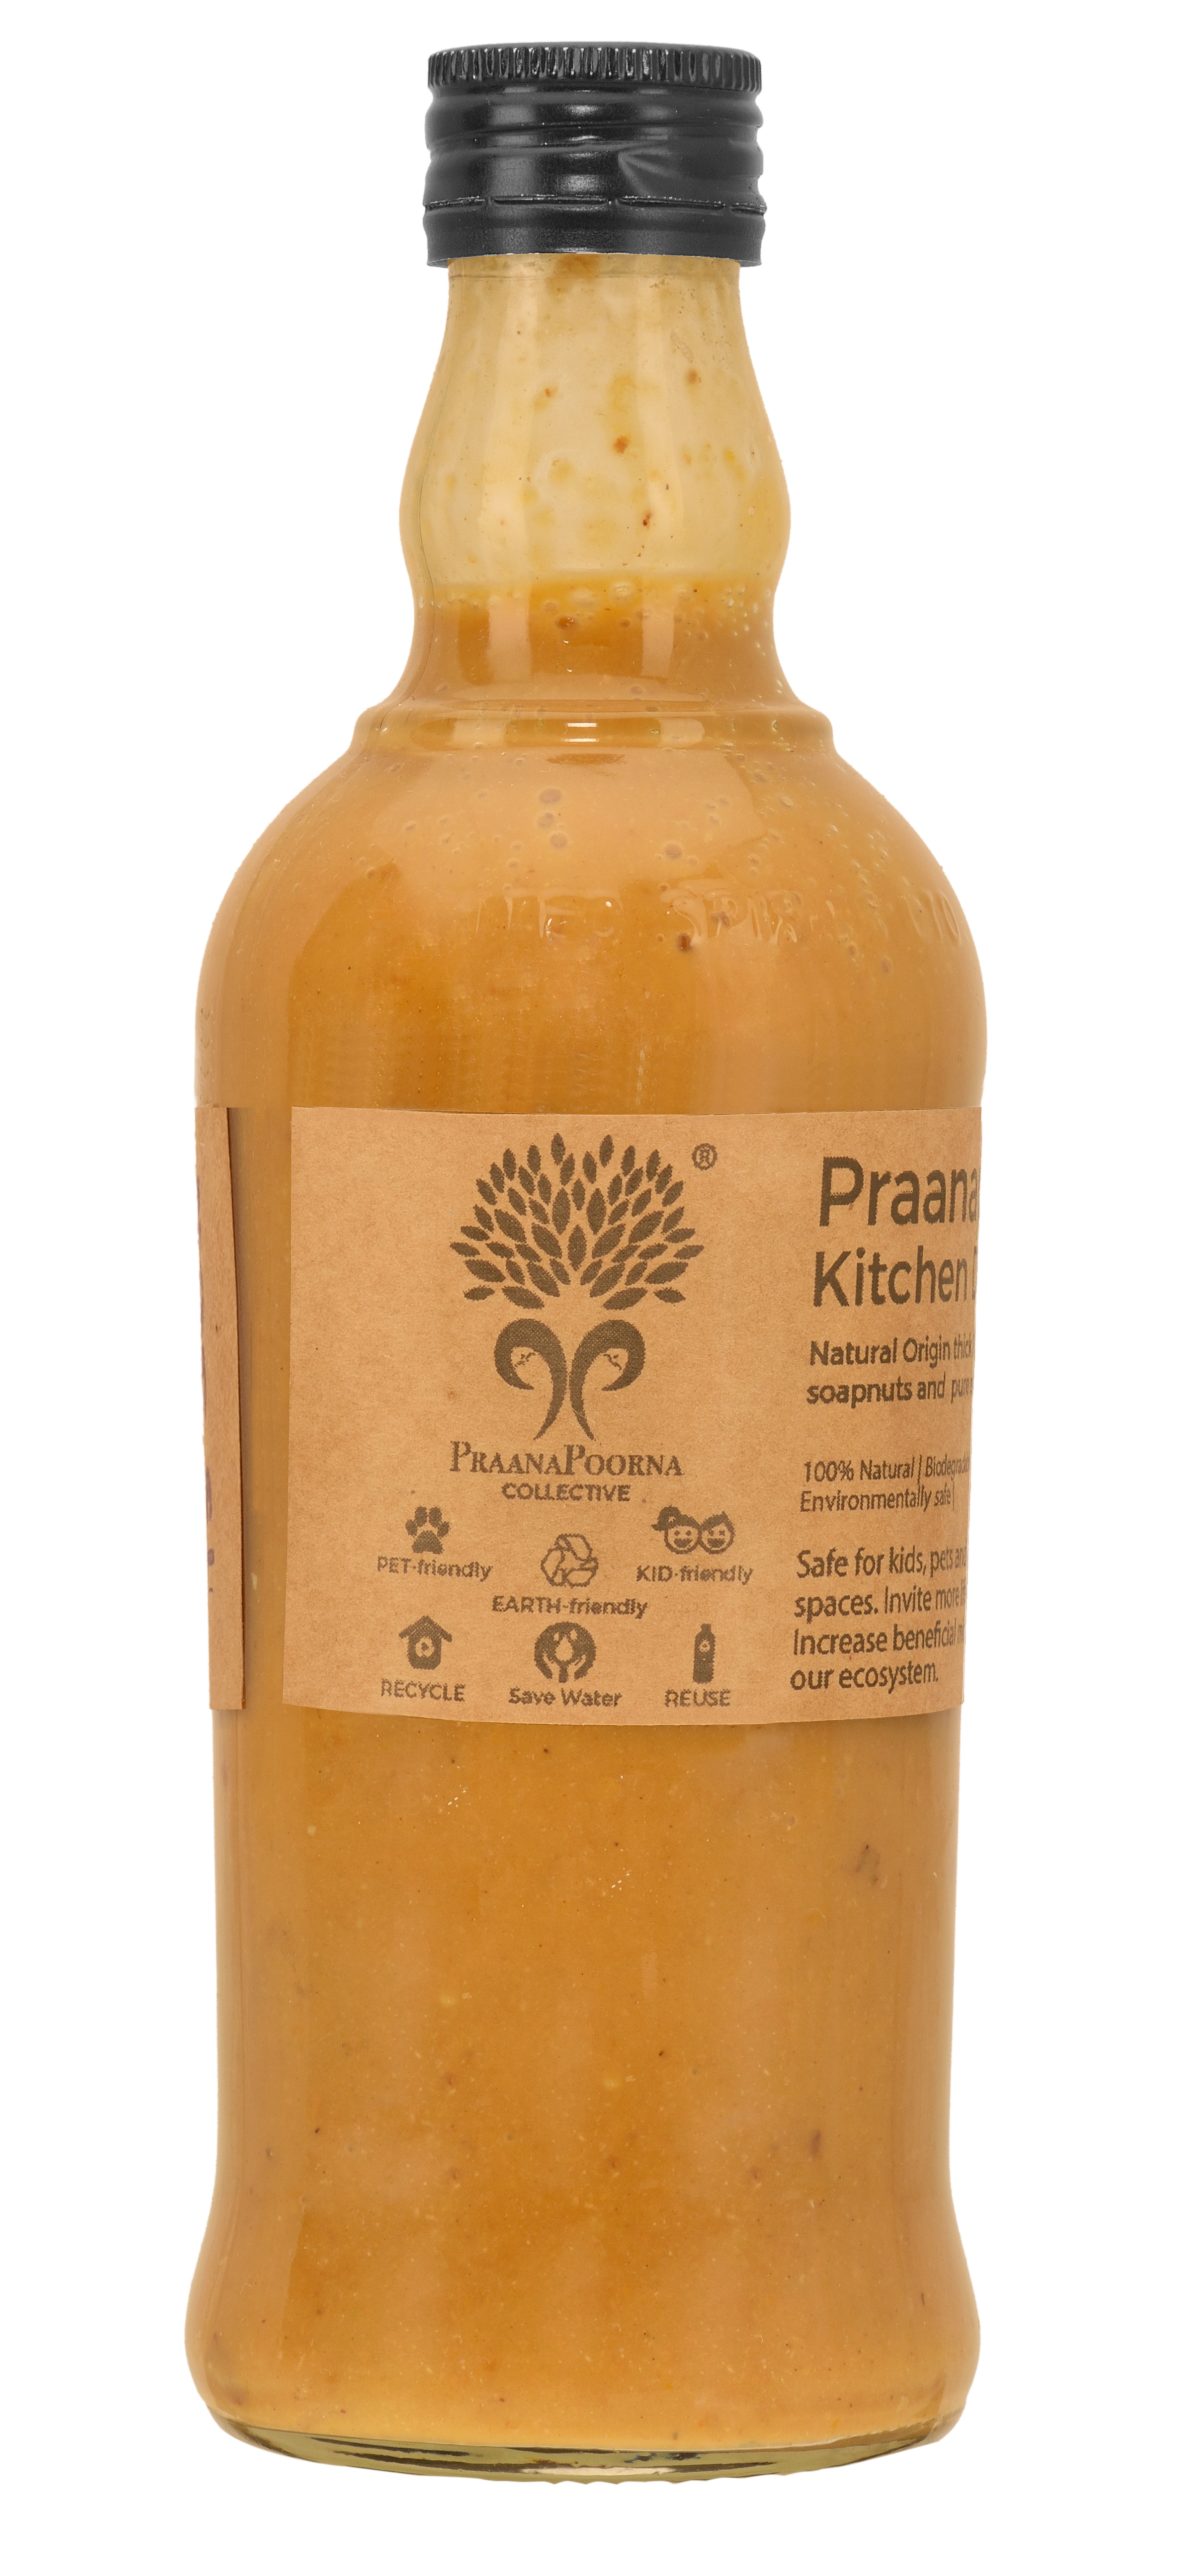 Product: PraanaPoorna Kitchen Degreaser